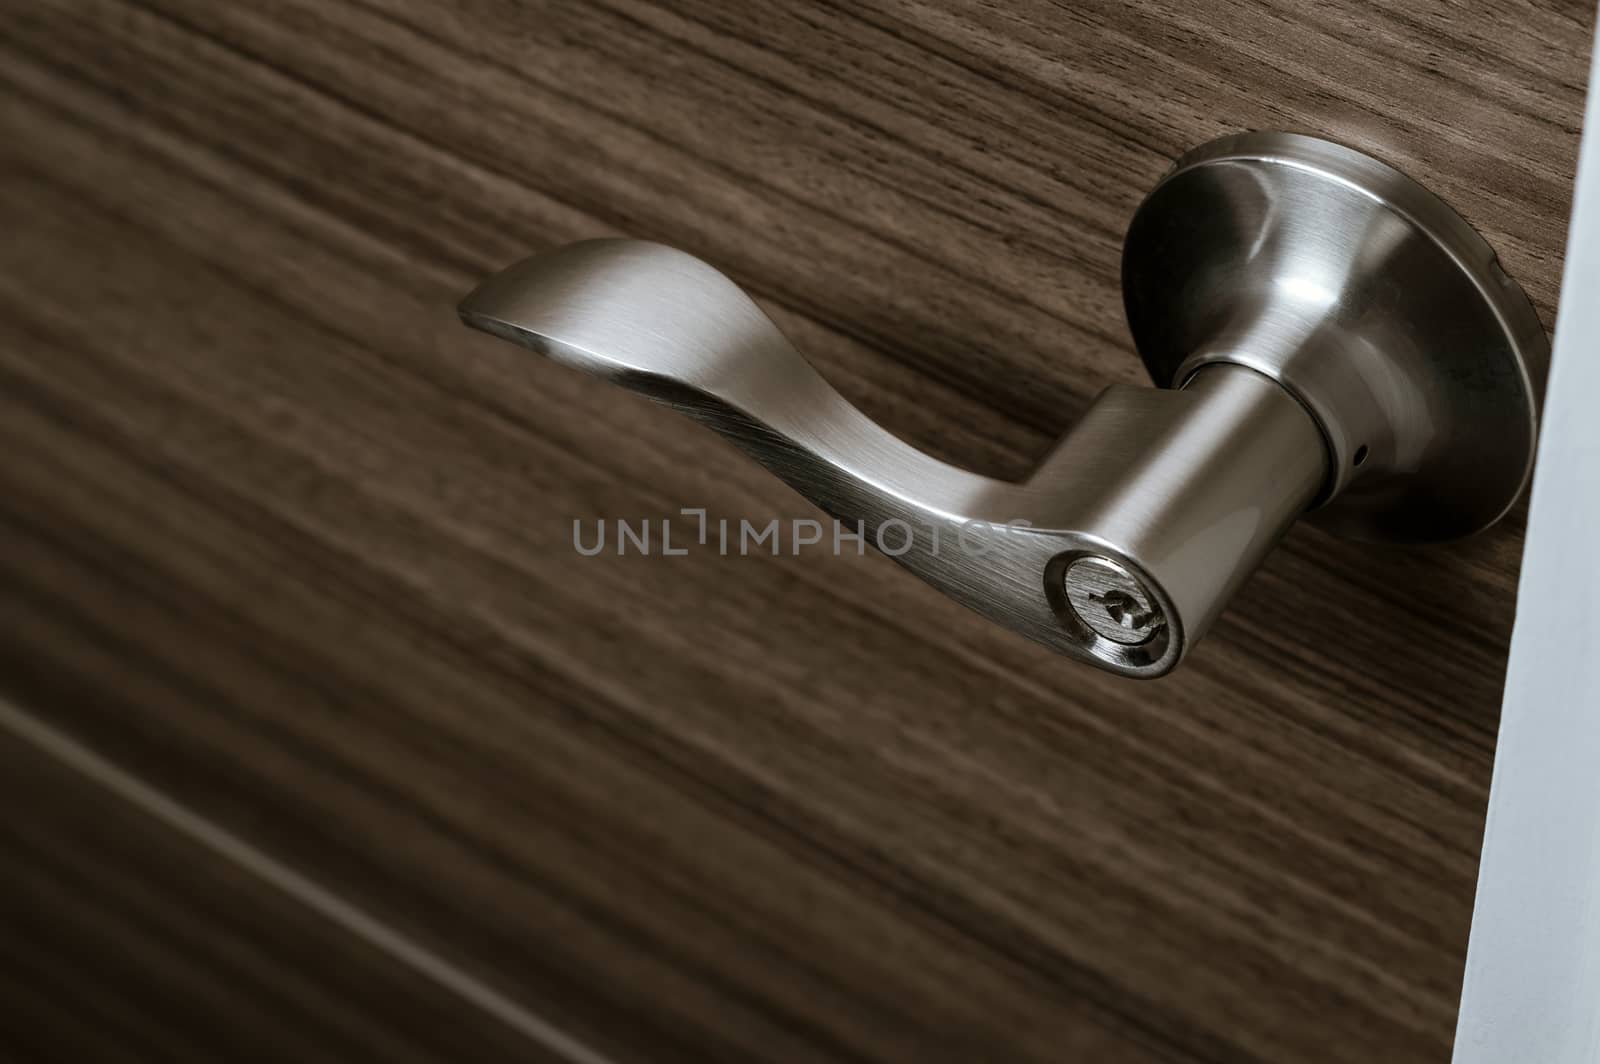 stainless steel door knob or handle with keyhole on wooden door, wave style lever handle front door knob with lock, modern interior design concept, shallow depth of field